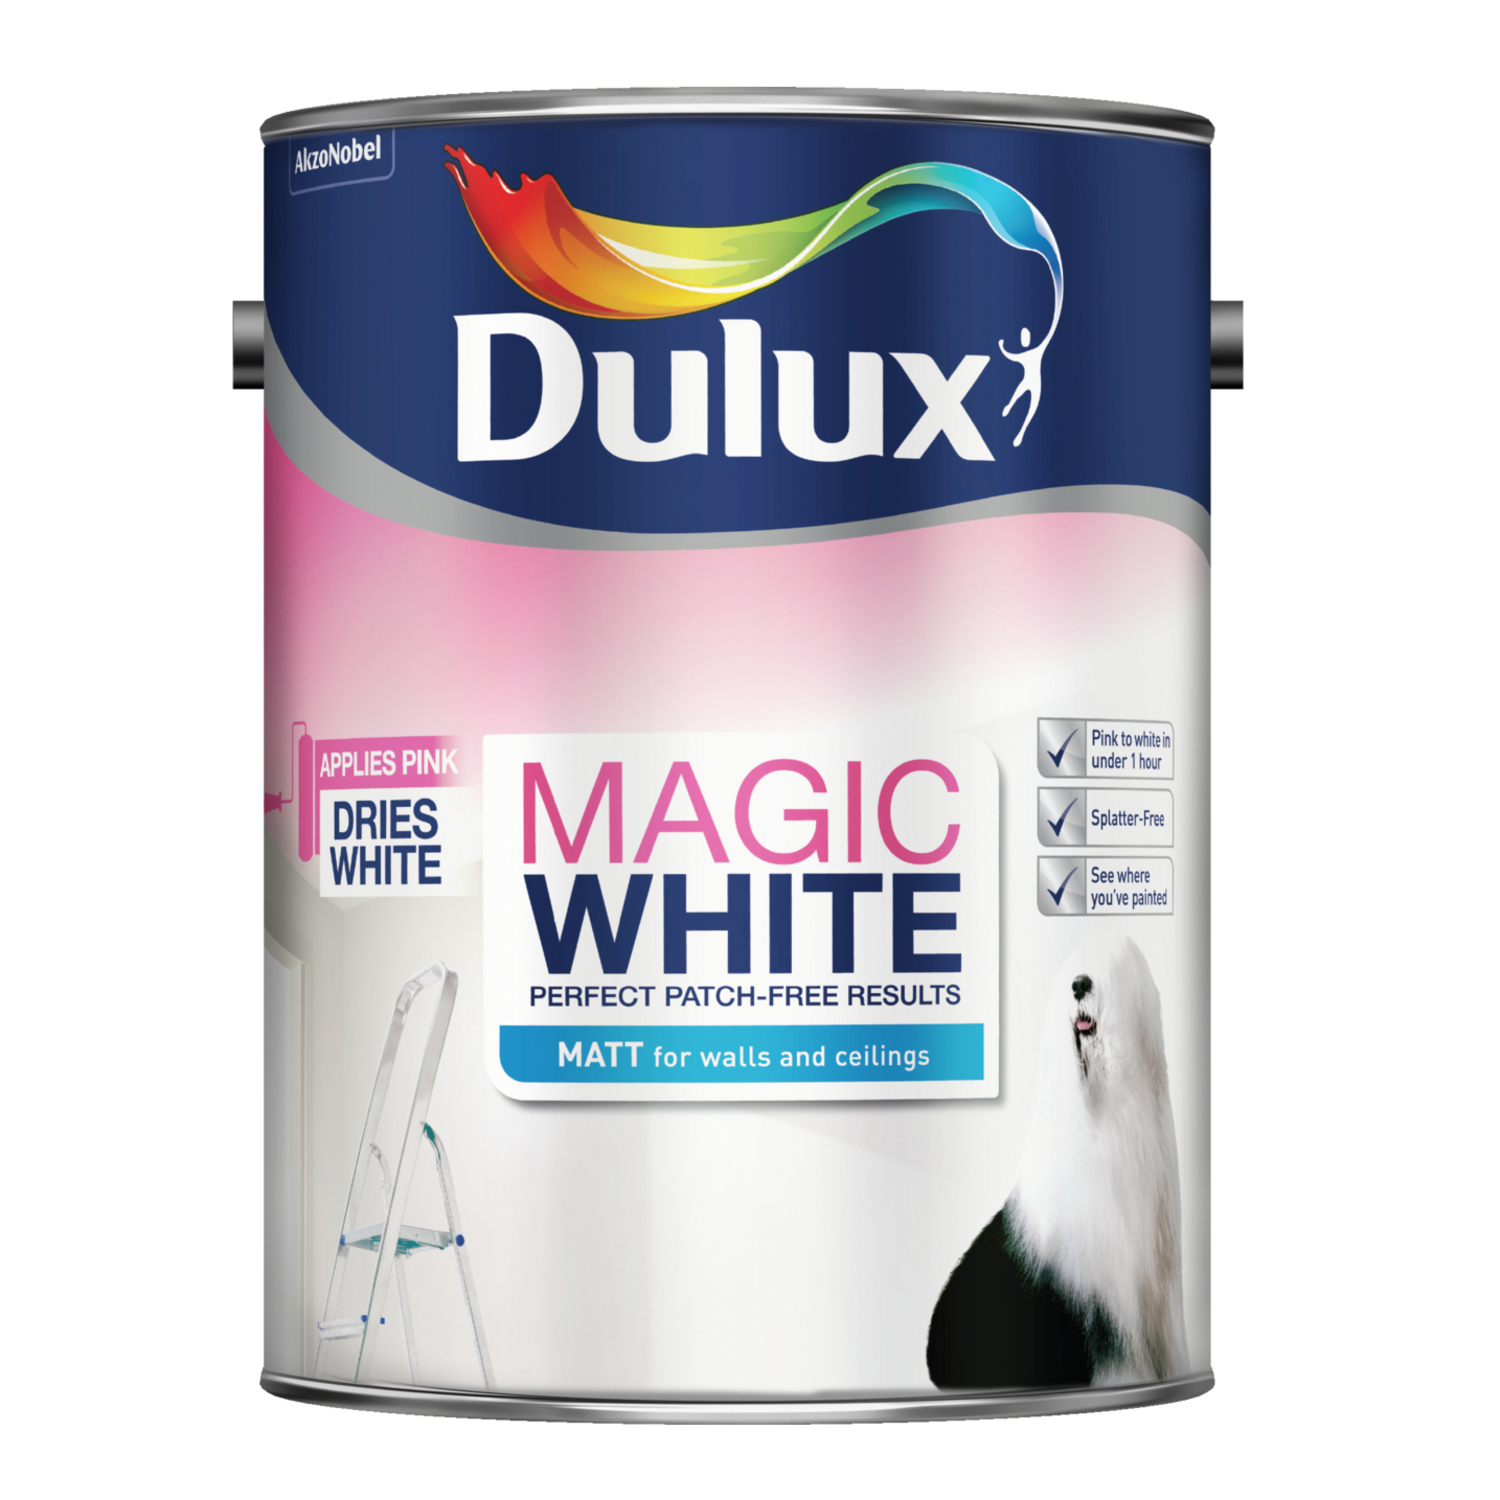 Dulux Walls and Ceilings Magic White Matt Emulsion Paint 5L Image 1